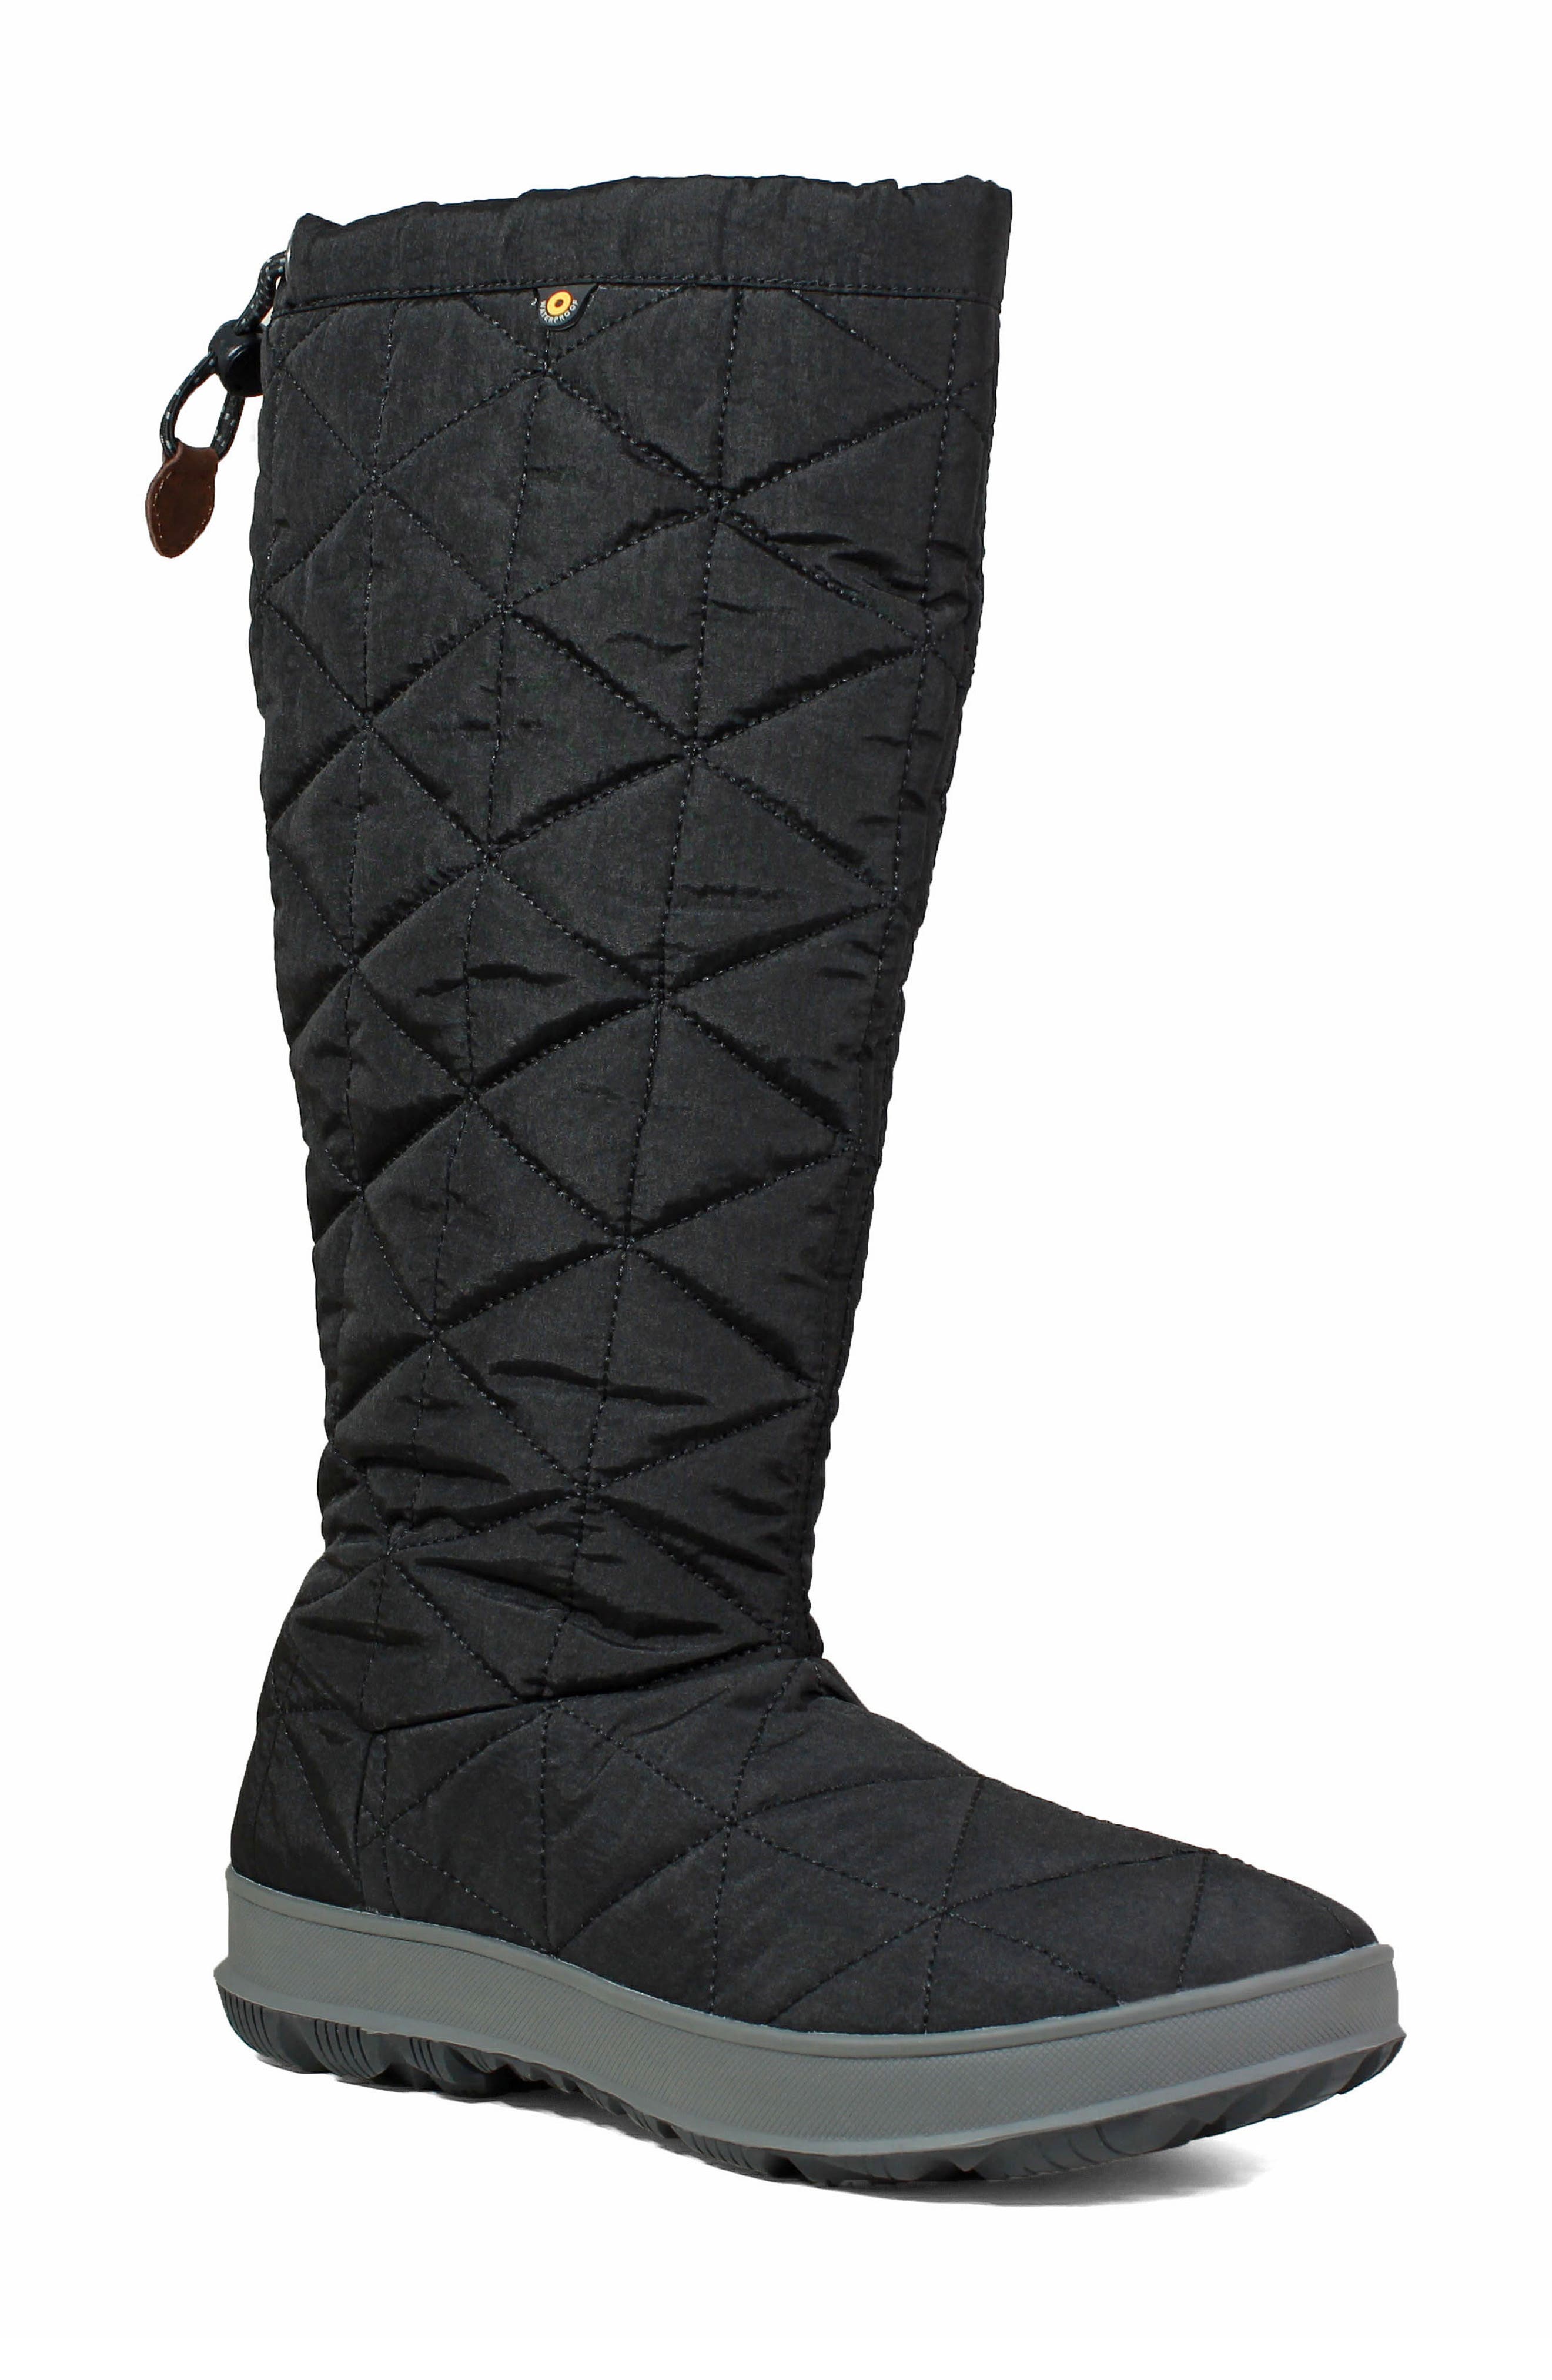 bogs women's snow boots